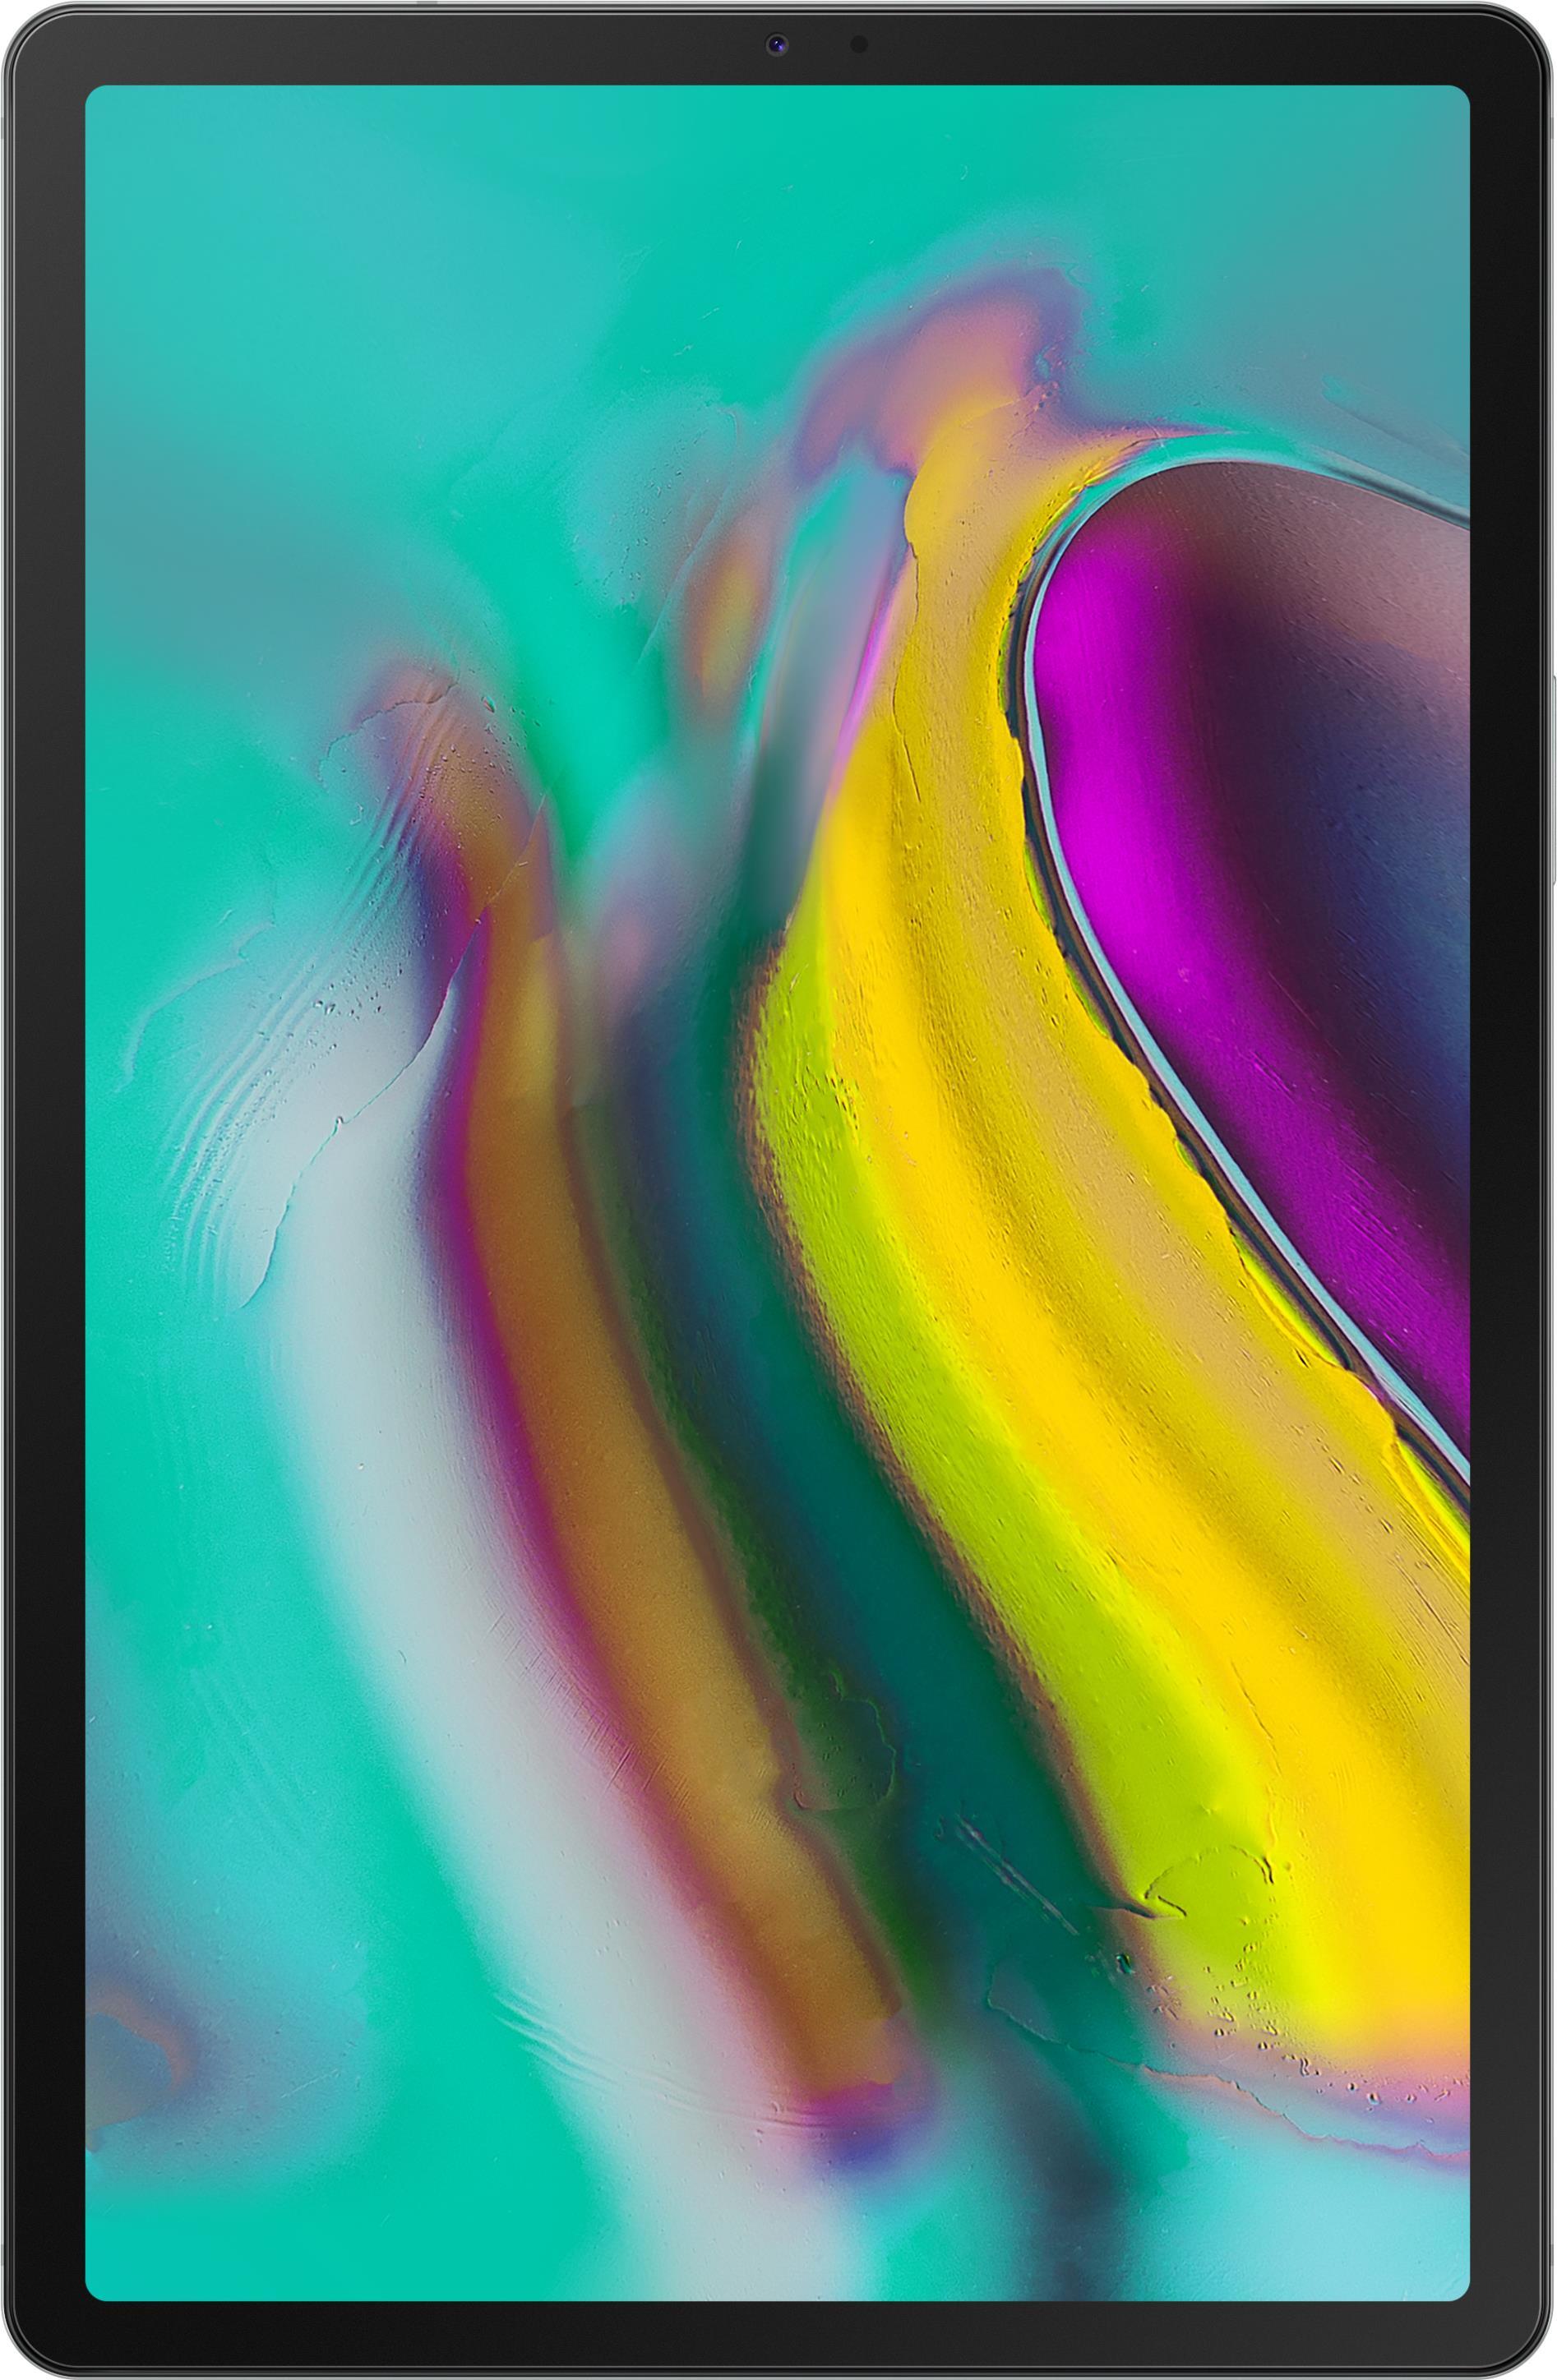 Samsung Galaxy Tab S5e - Tablet - Android 9.0 (Pie) - 64 GB - 26.7 cm (10.5) Super AMOLED (2560 x 1600) - microSD-Steckplatz - 4G - LTE - Silber